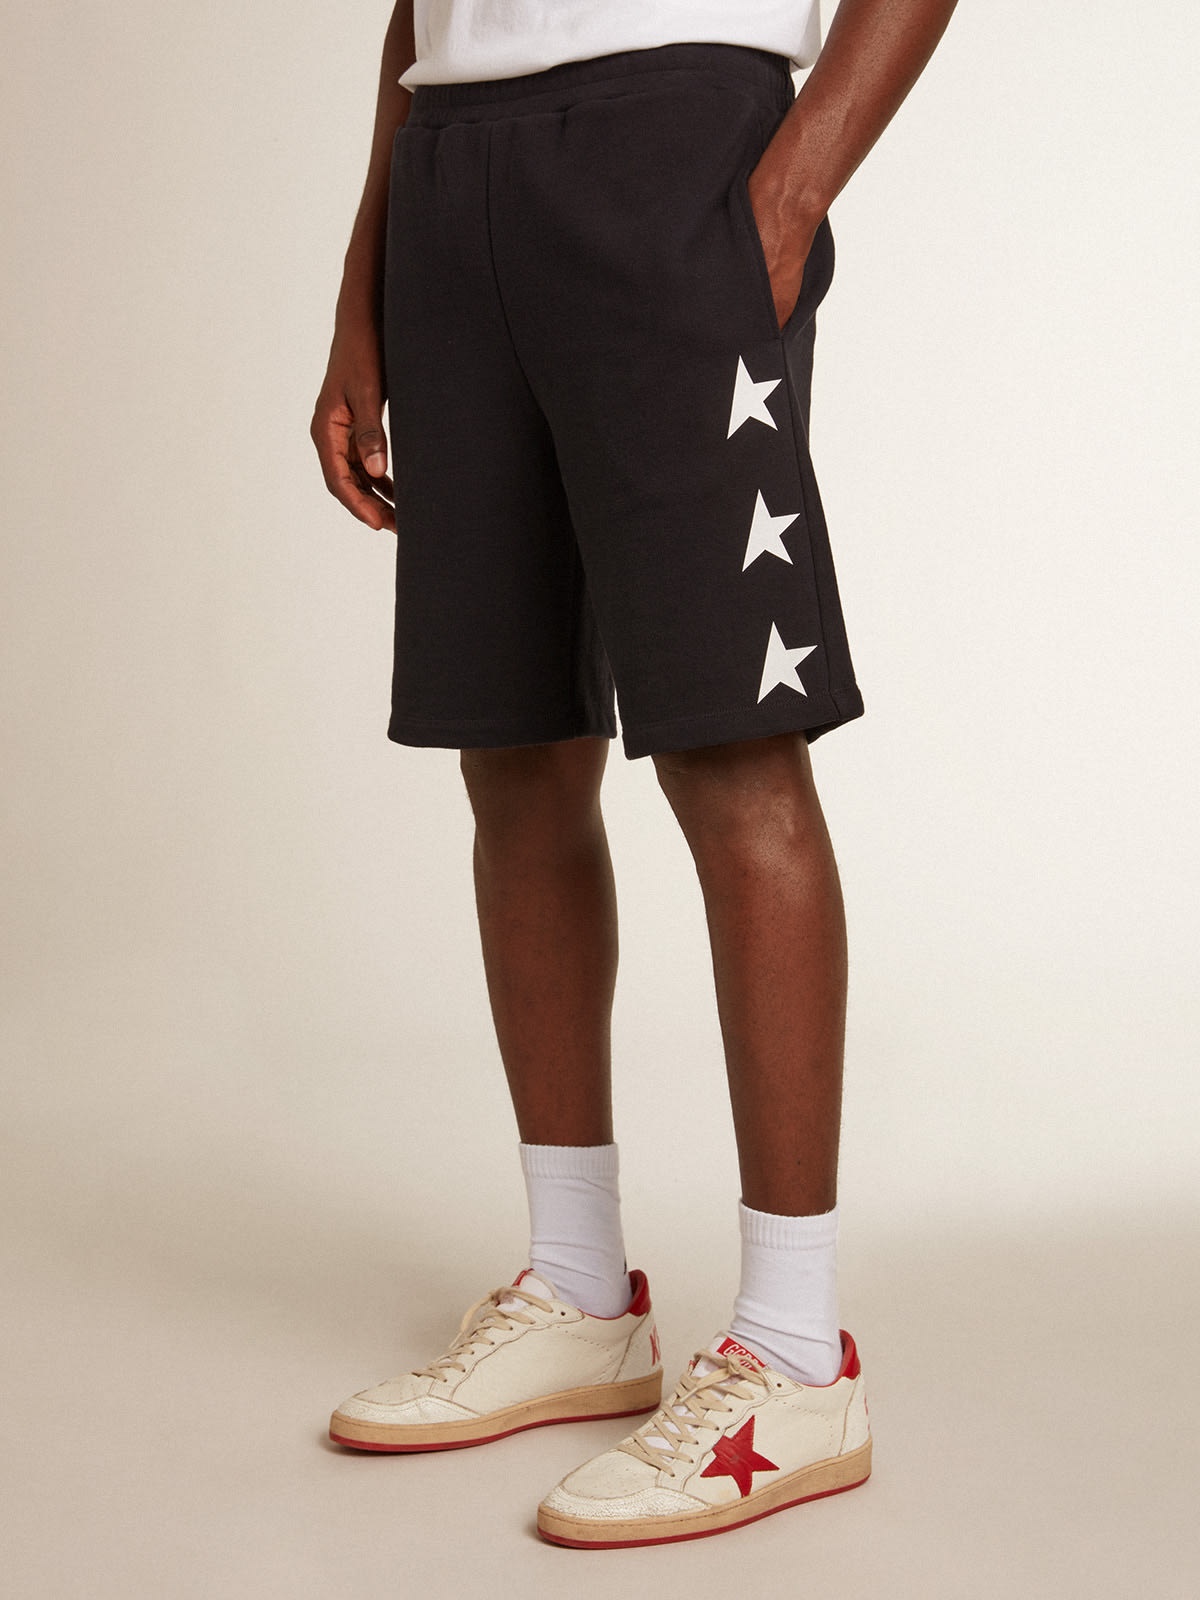 Men's black bermuda shorts with white stars - 2